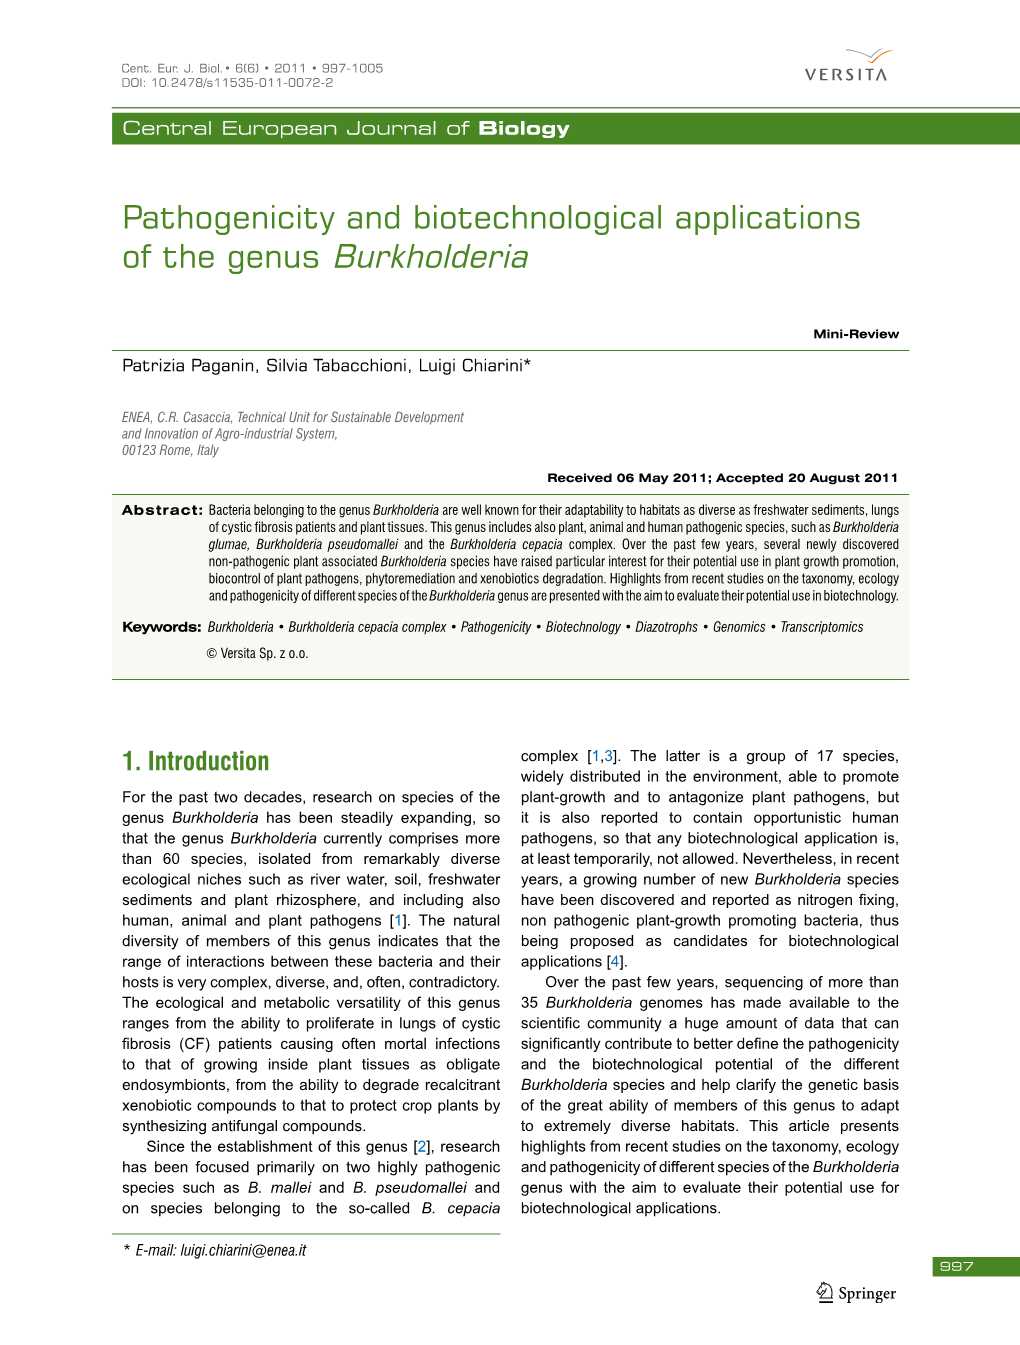 Pathogenicity and Biotechnological Applications of the Genus Burkholderia